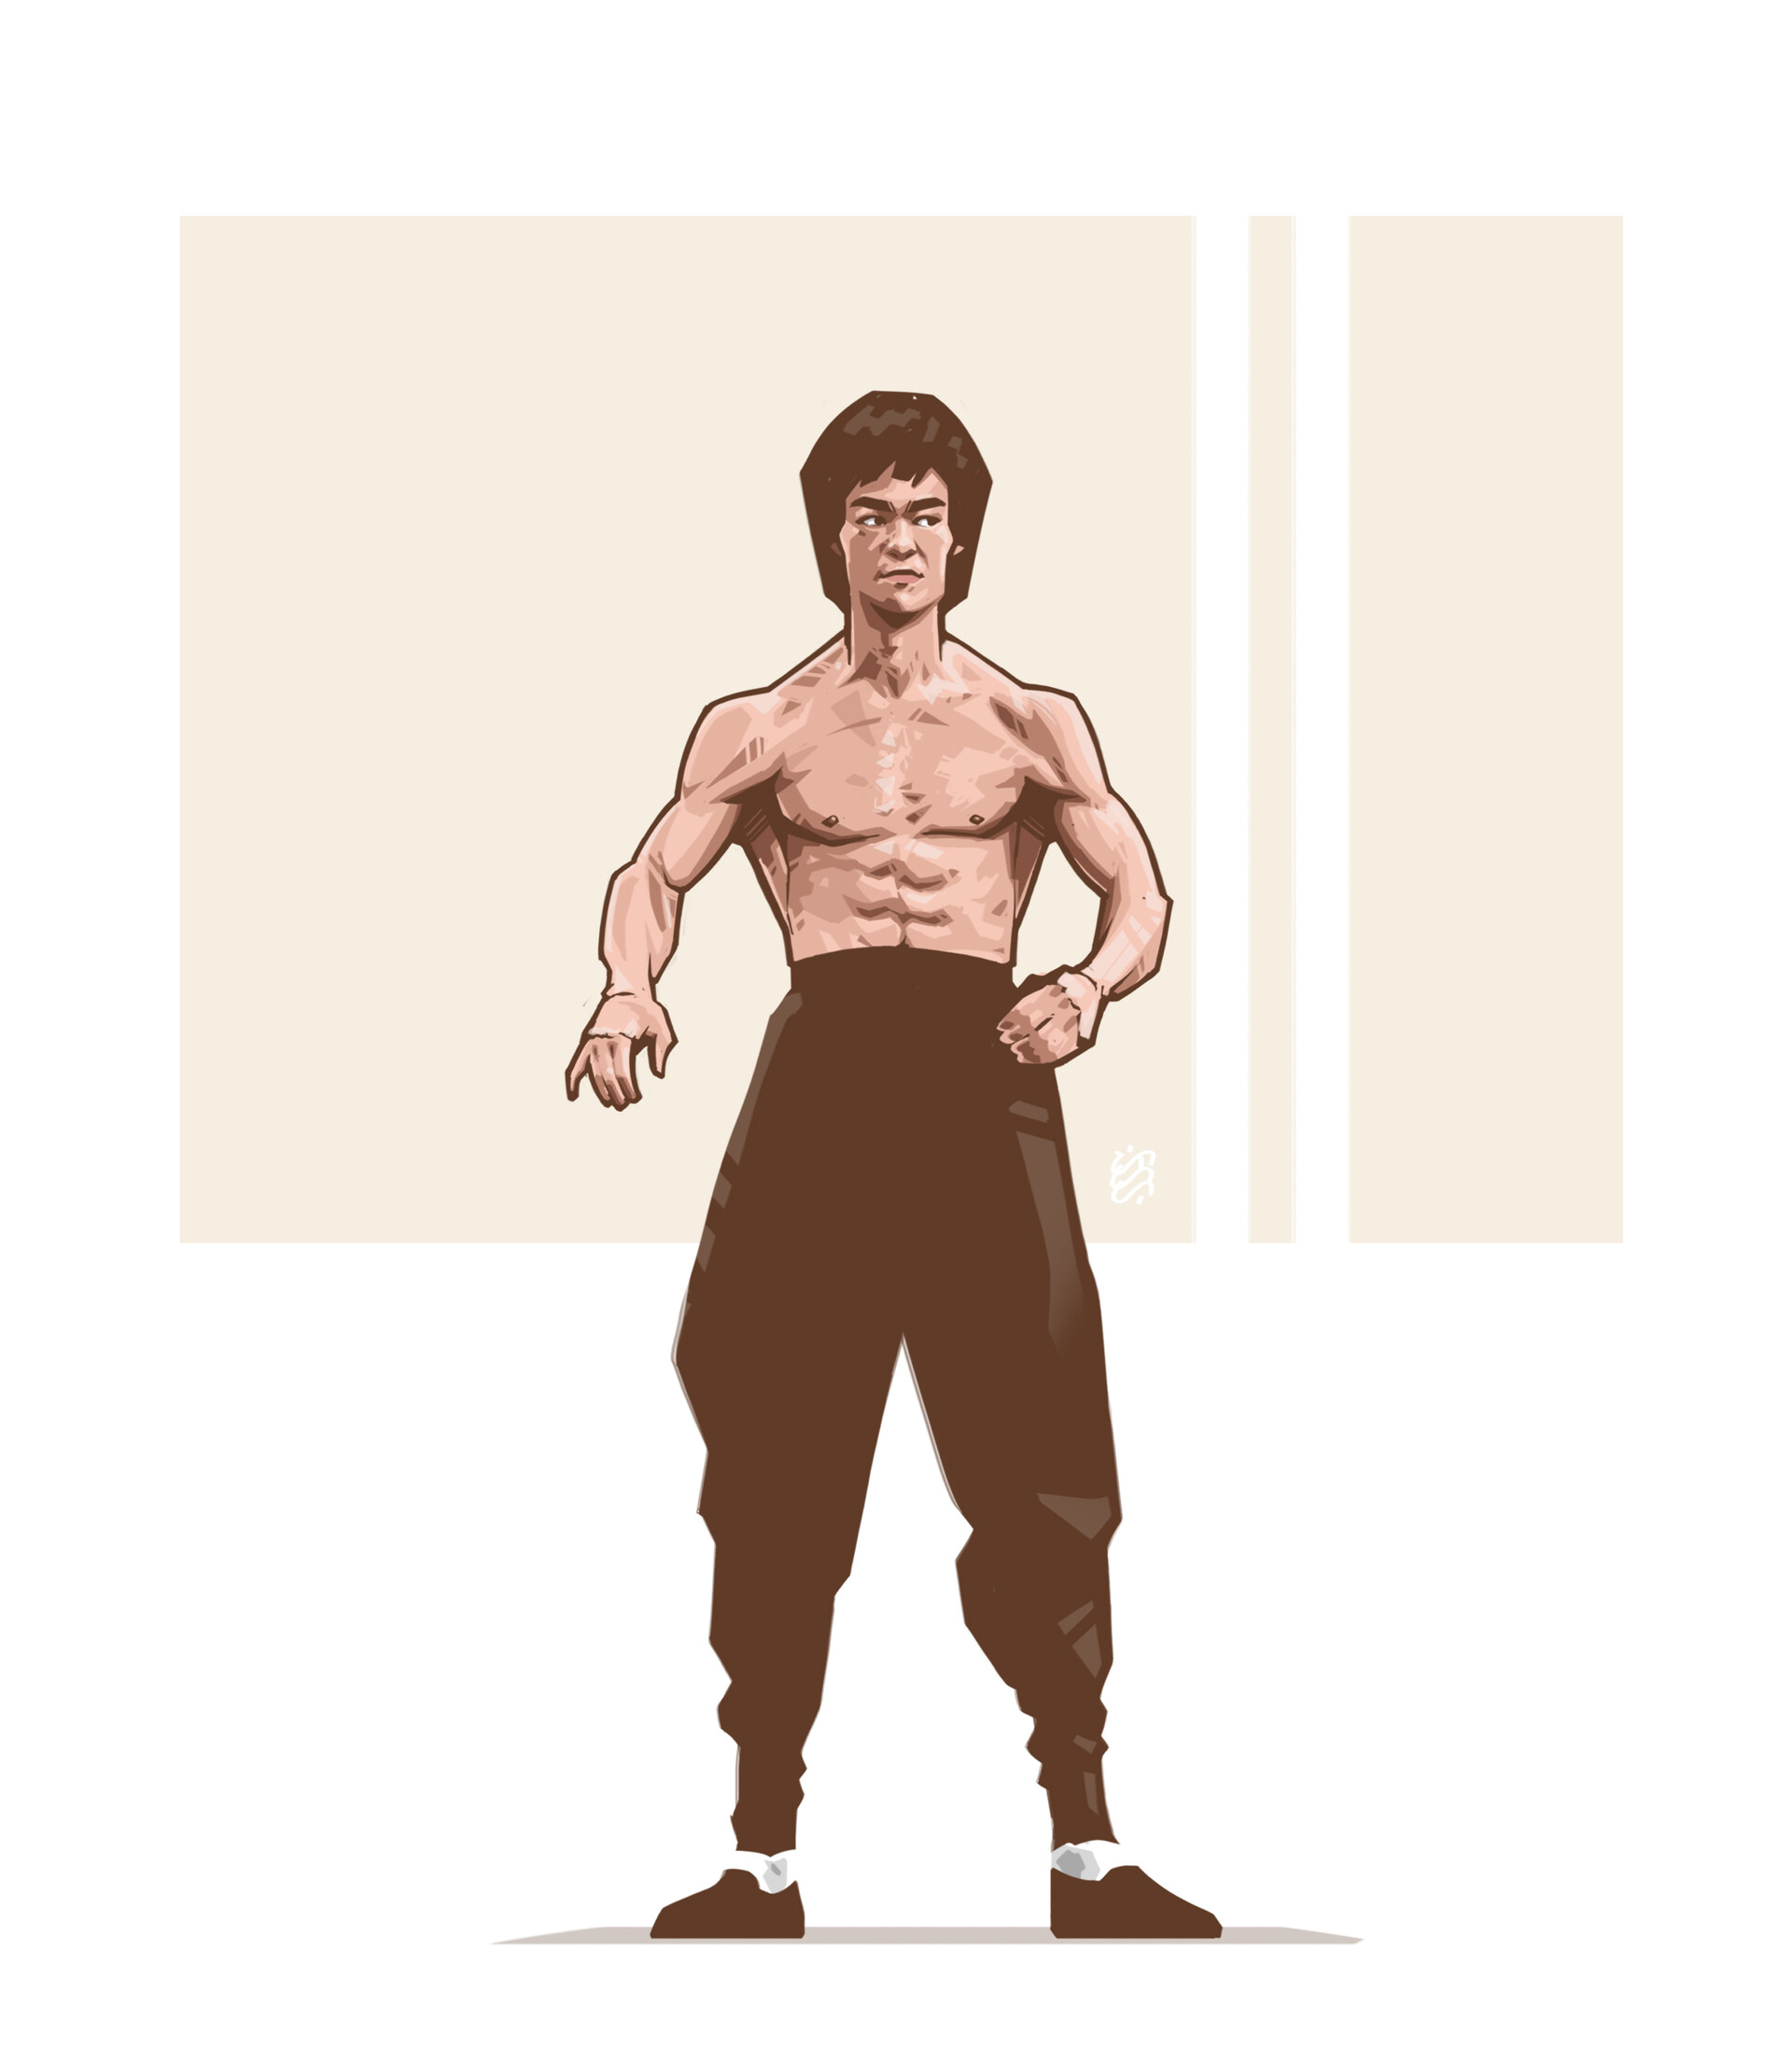 ArtStation - Bruce Lee Speed Draw